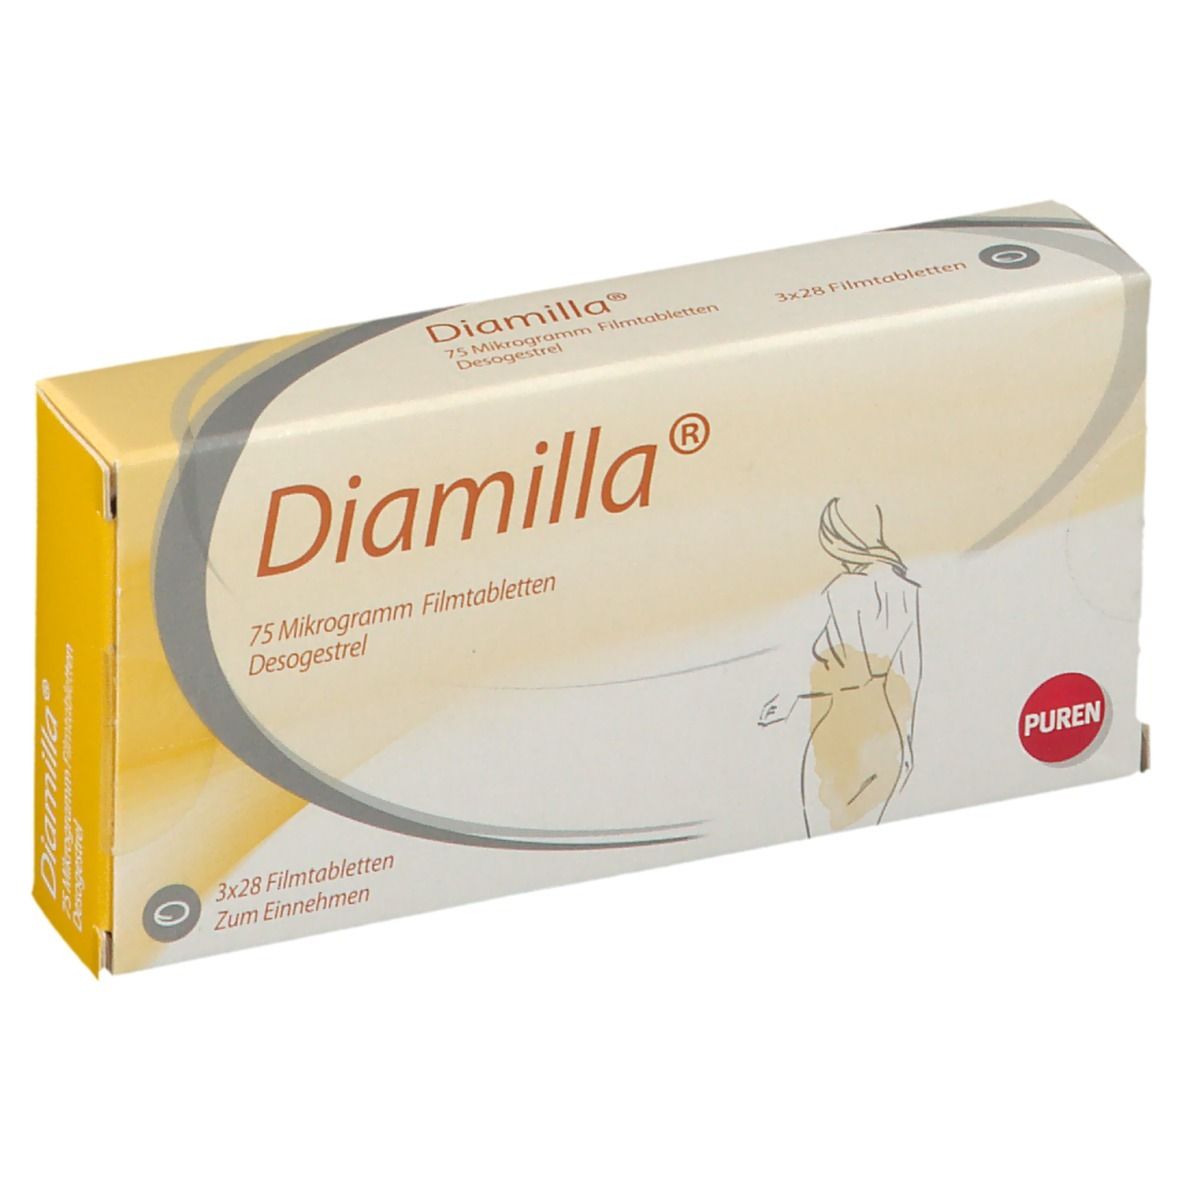 Diamilla™ 75 Mikrogramm